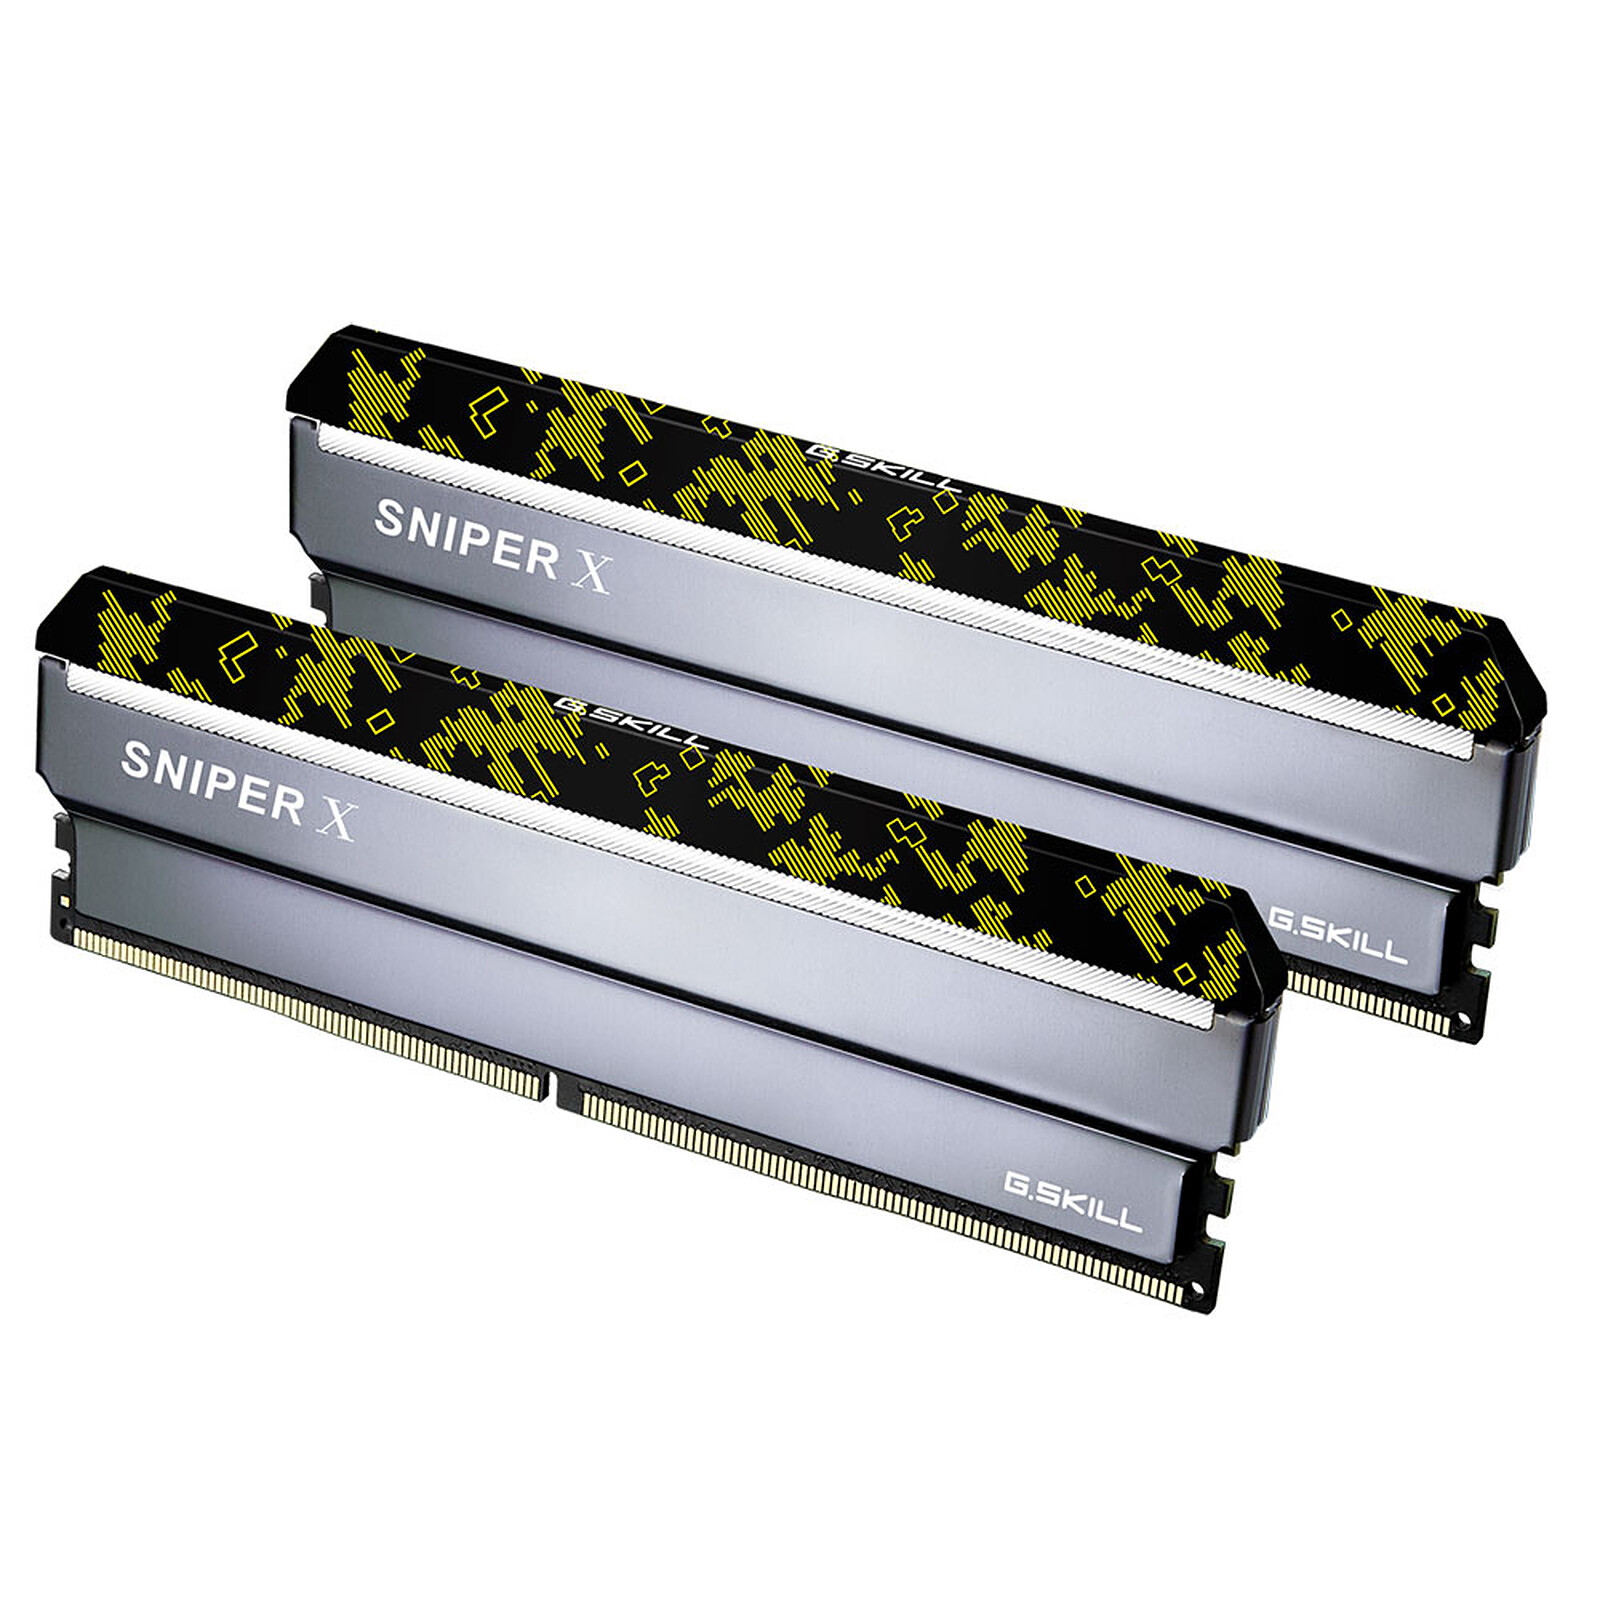 Gskill SniperX DDR4 3600MHz 16GB(8*8)